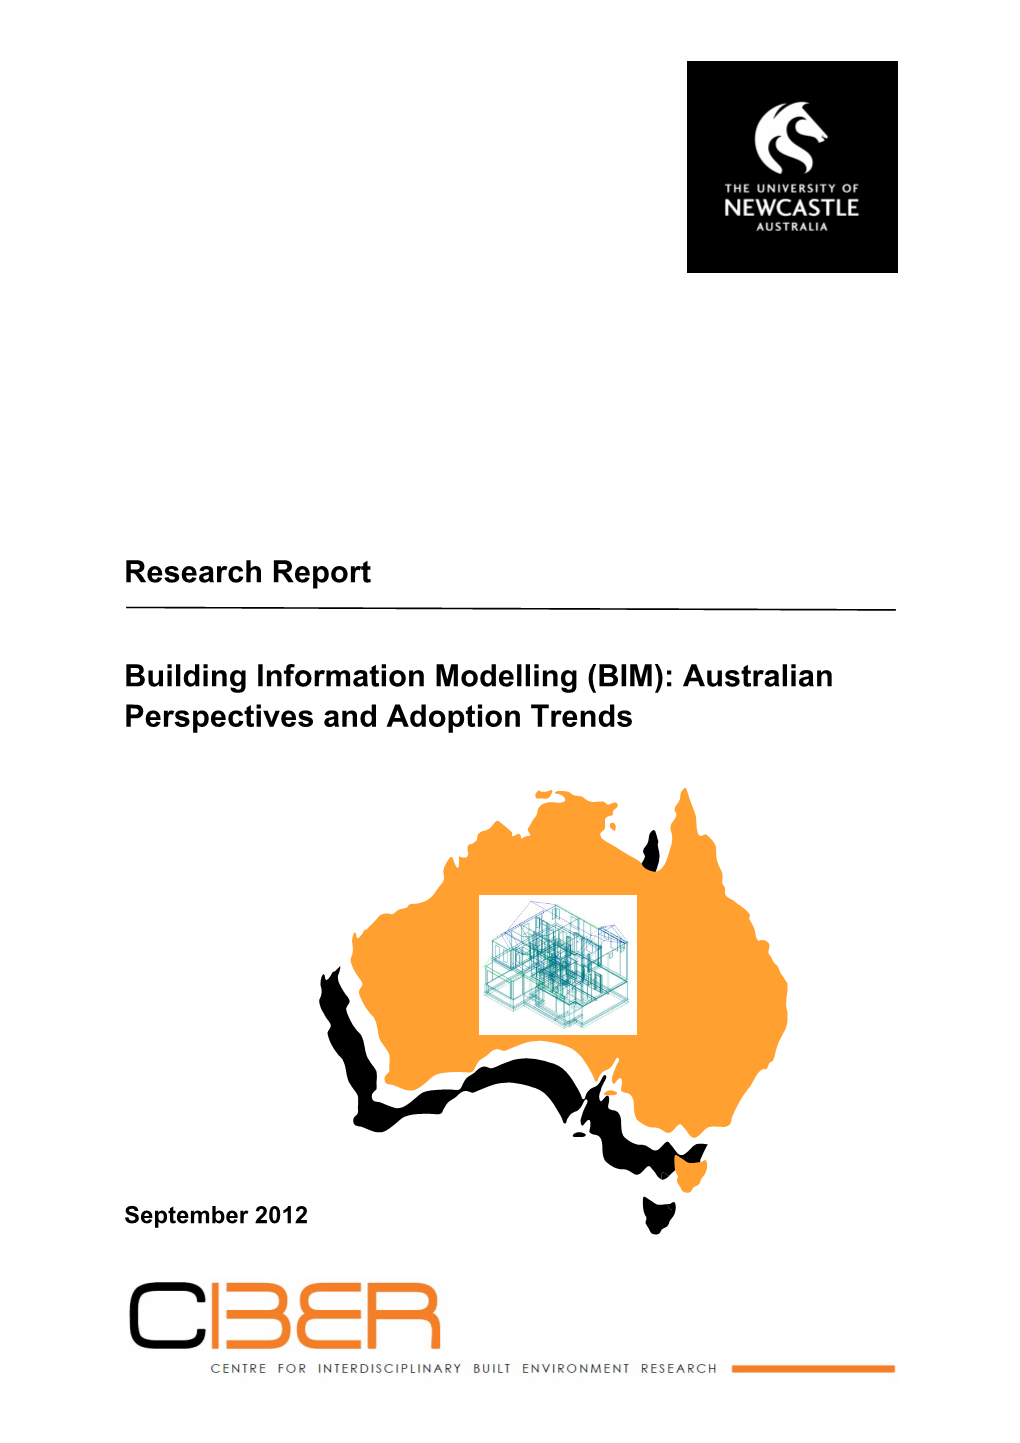 BIM): Australian Perspectives and Adoption Trends